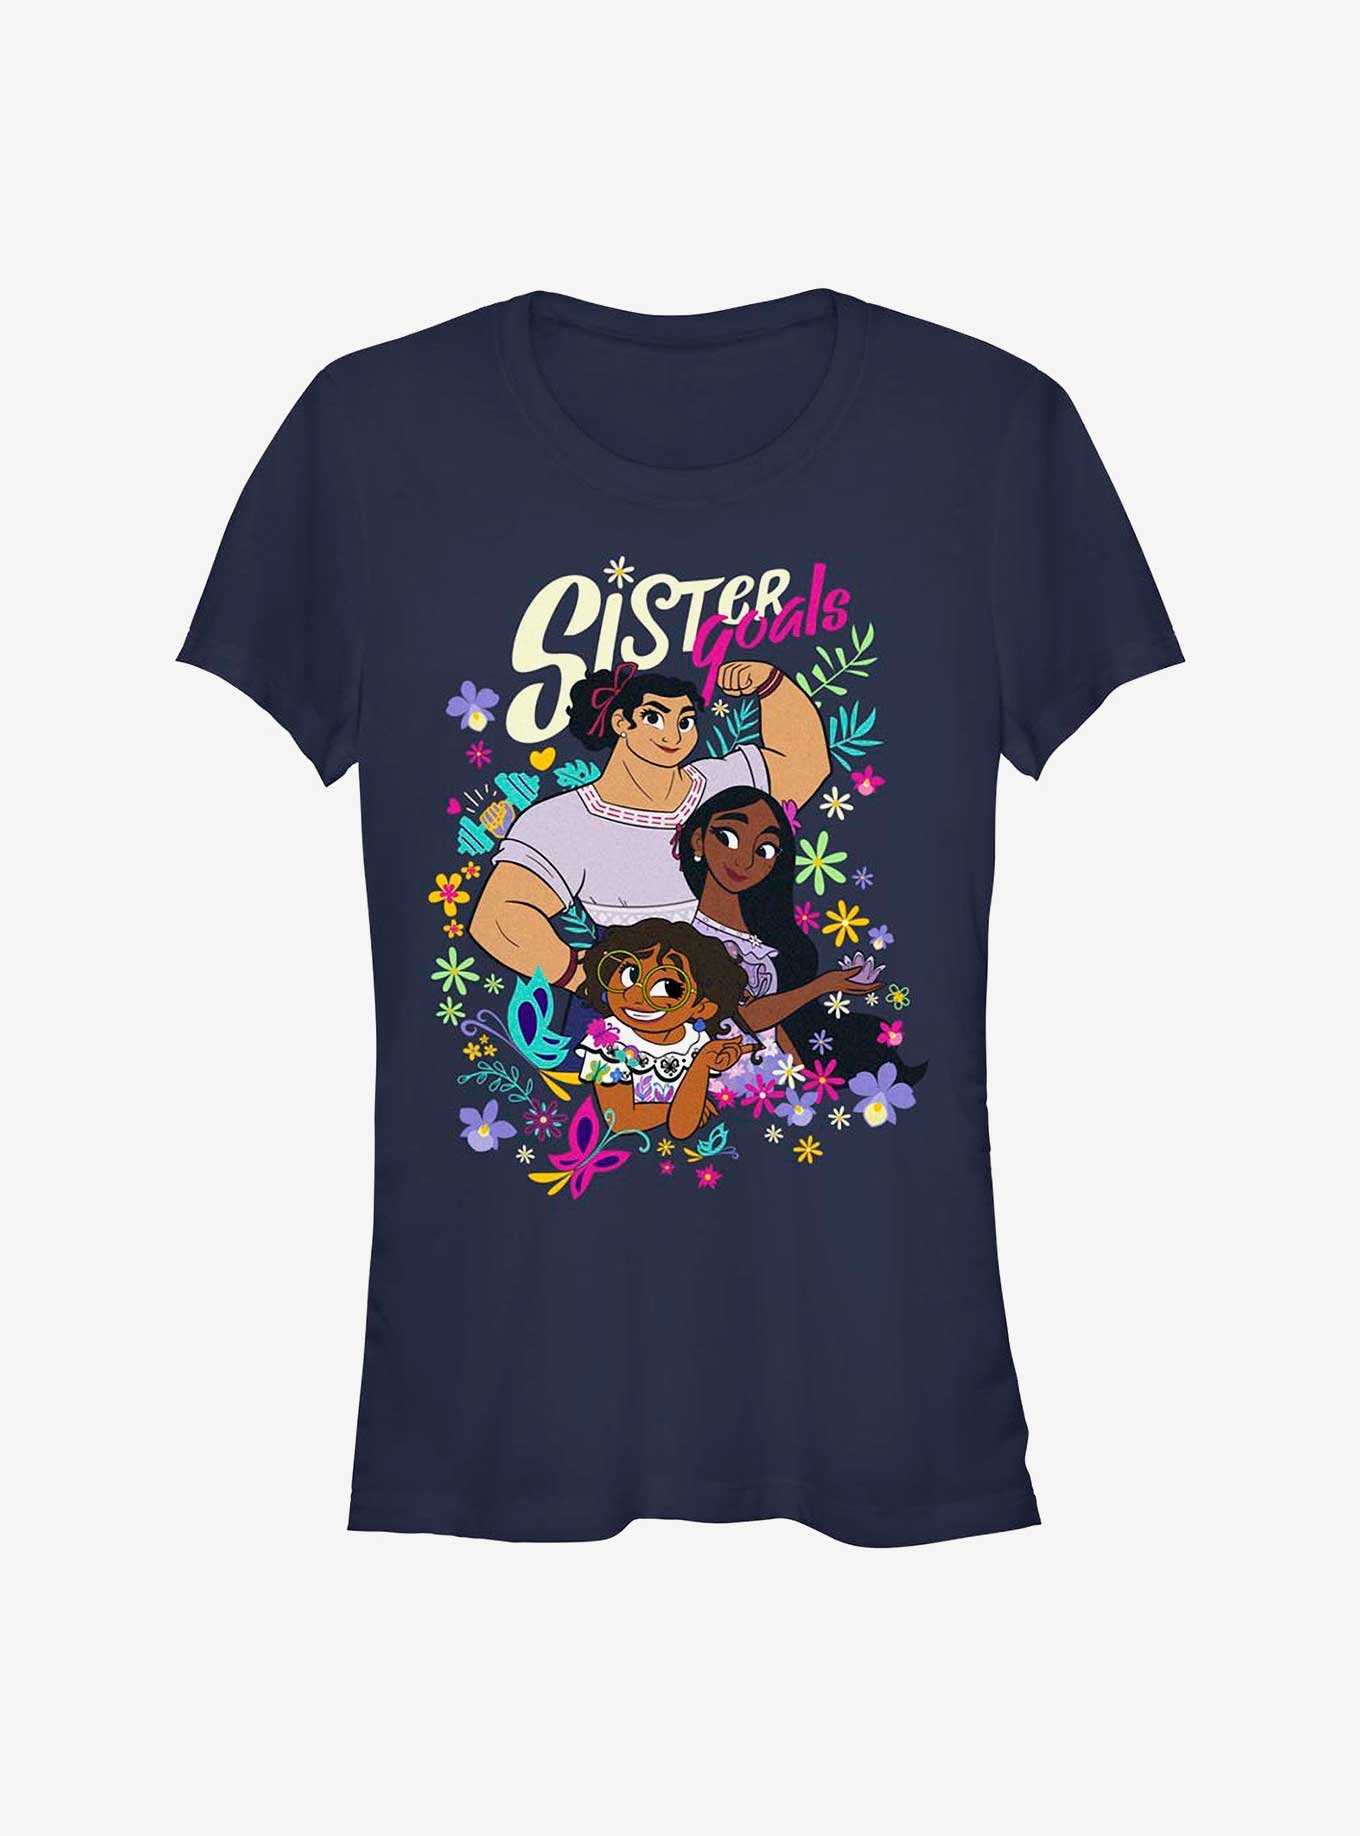 Disney Encanto Sister Goals Girl's T-Shirt, NAVY, hi-res